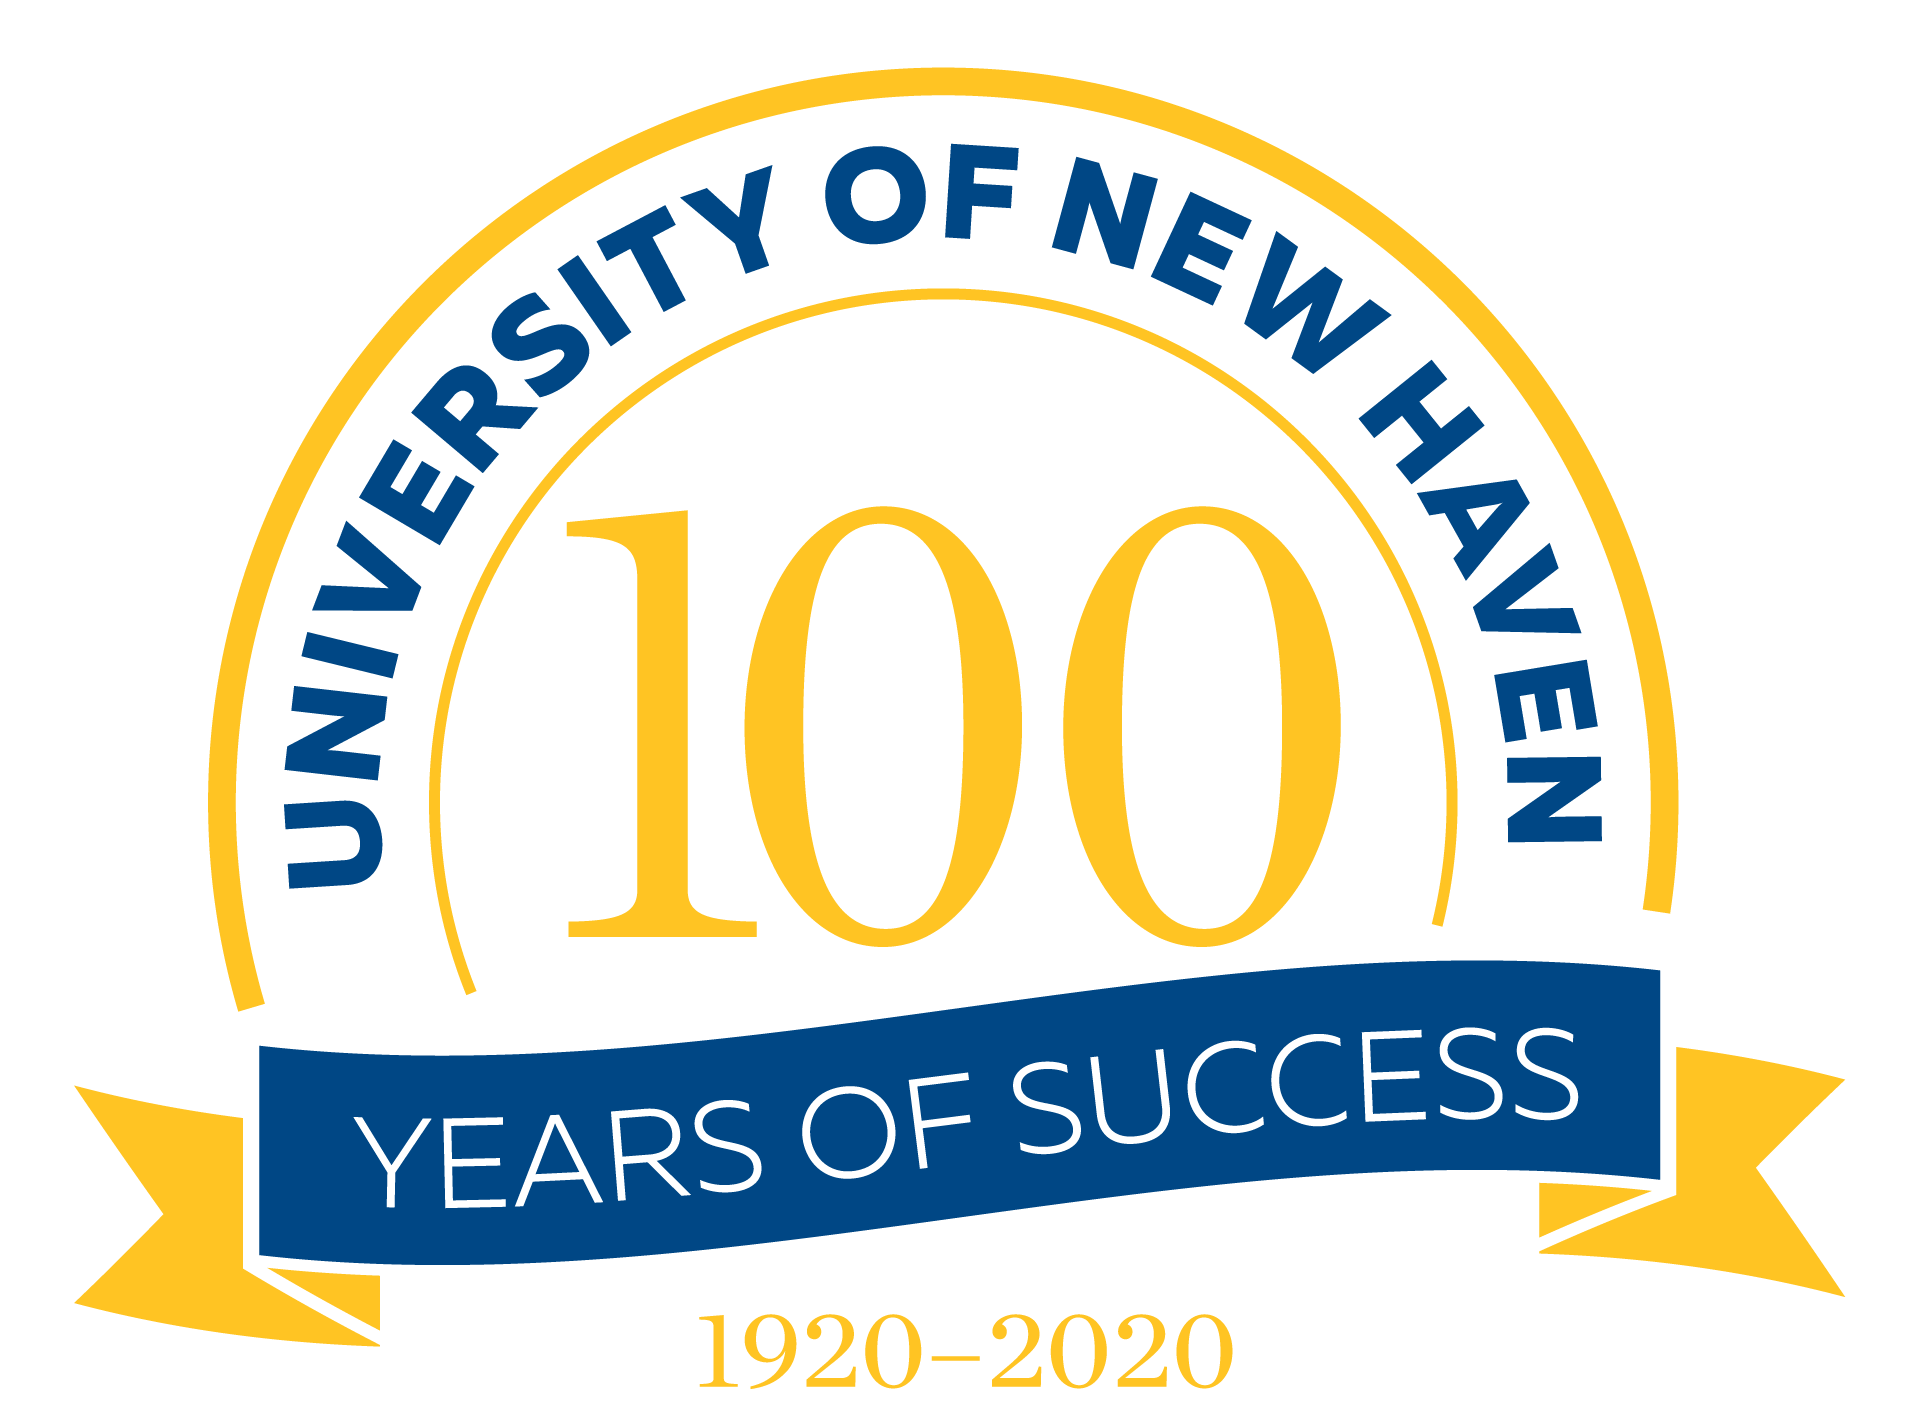 University of New Haven Centennial (1920-2020)